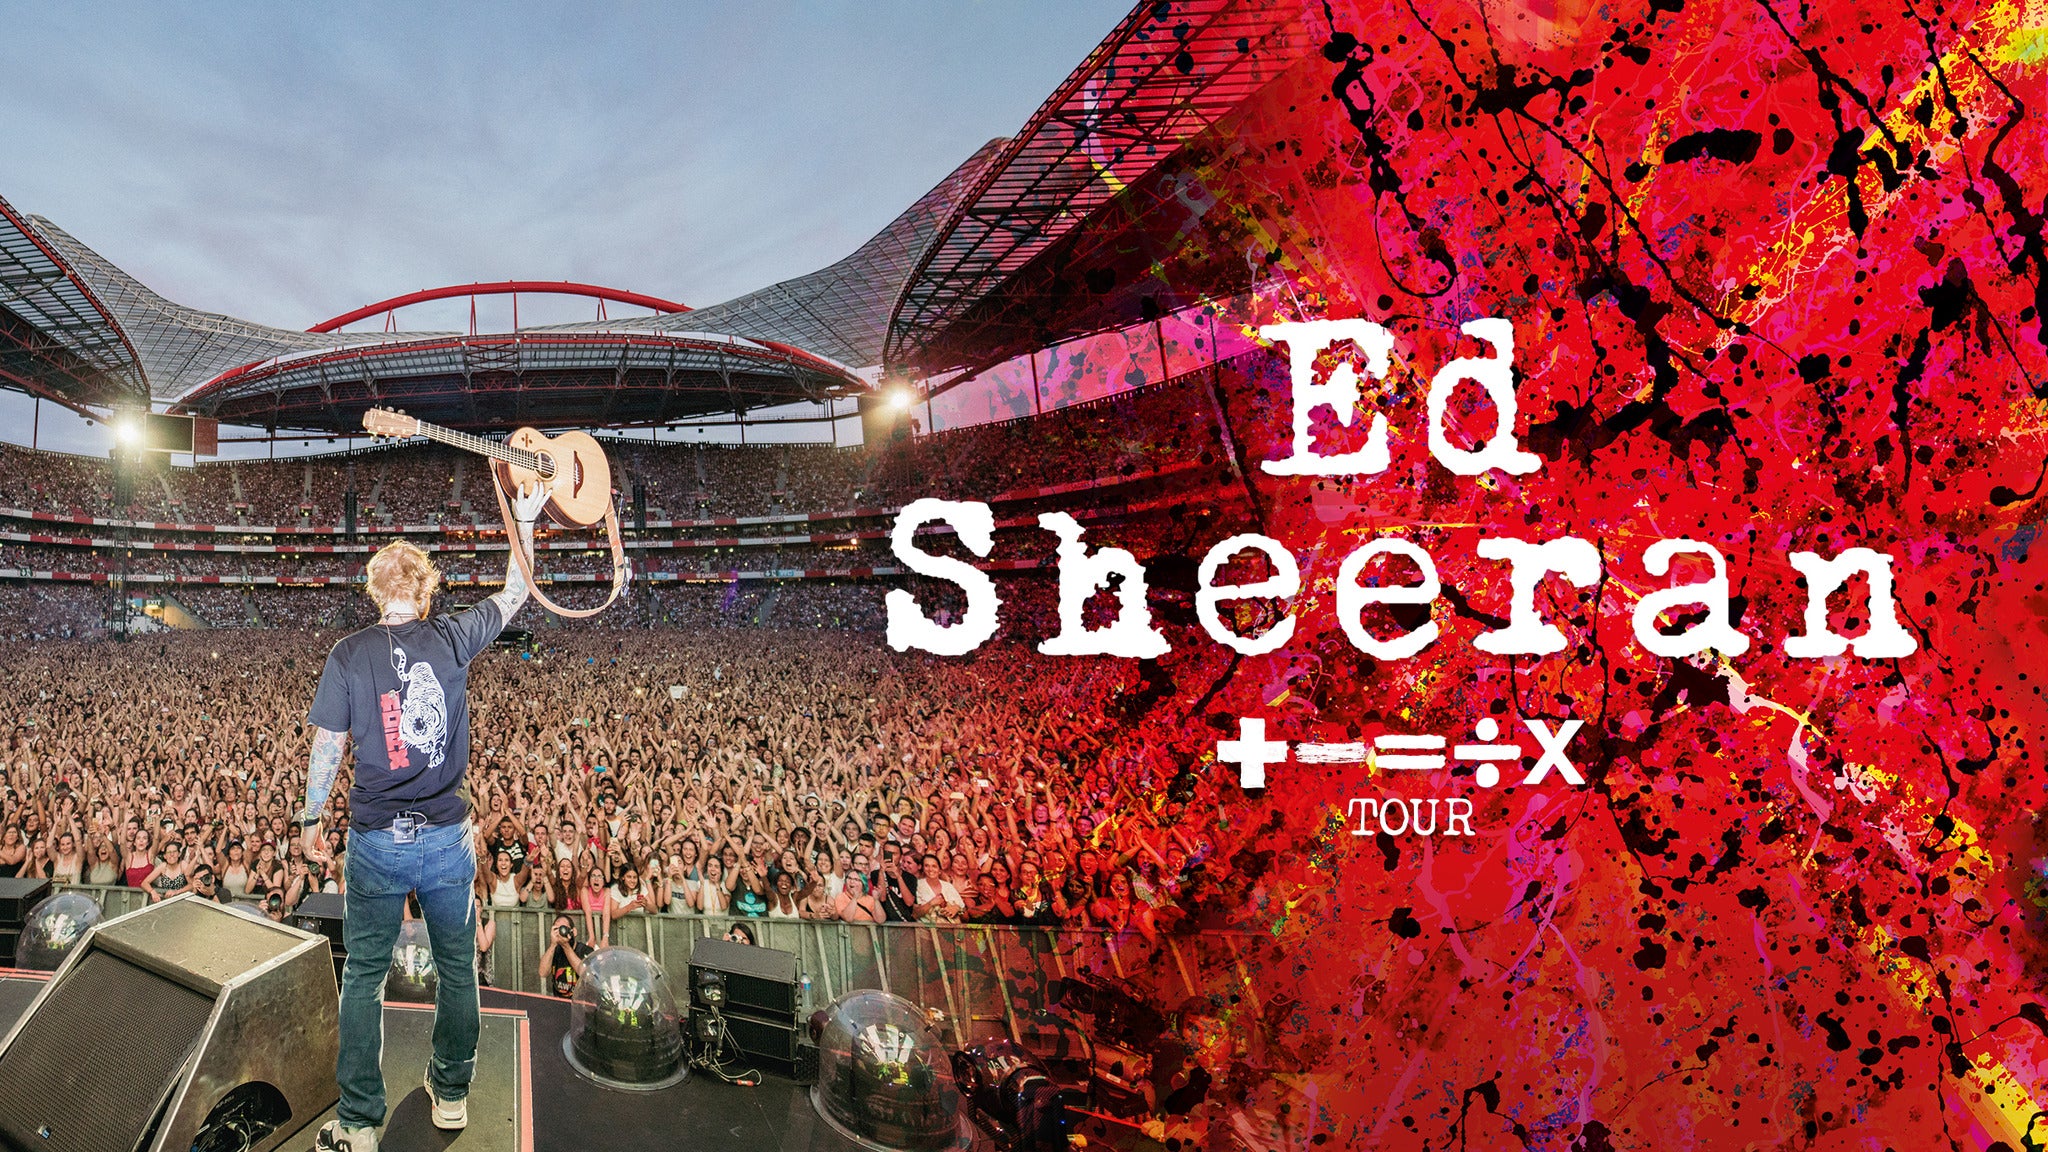 Ed Sheeran + - = ÷ x Tour Event Title Pic